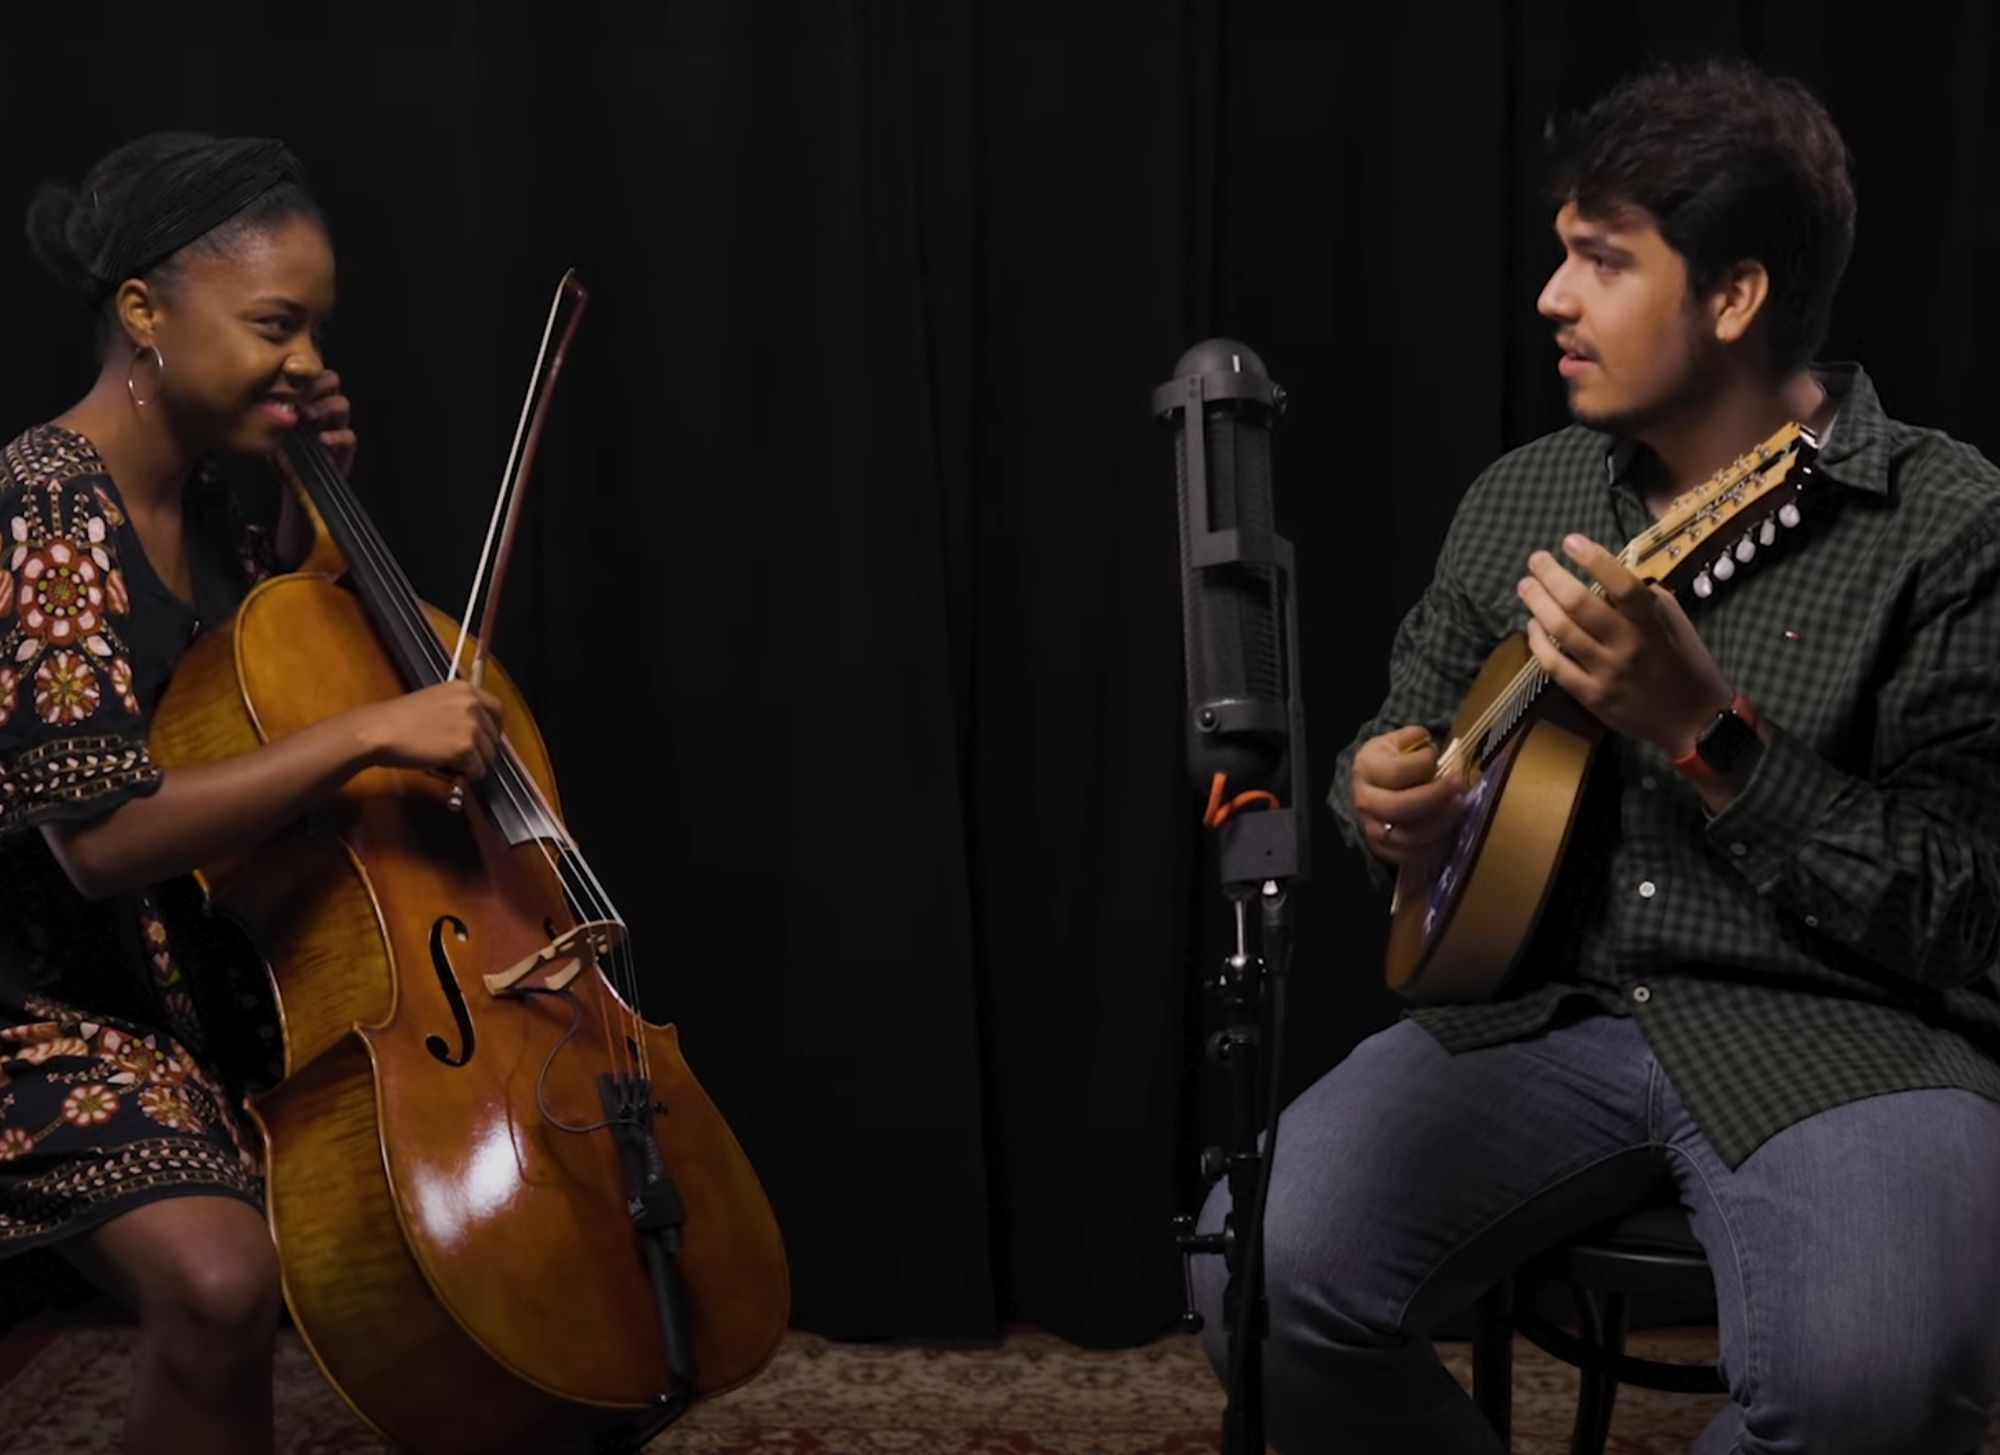 Mandolinist Ian Coury and cellist Kely Pinheiro, two Brazilians, form the Pinheiro & Coury duo